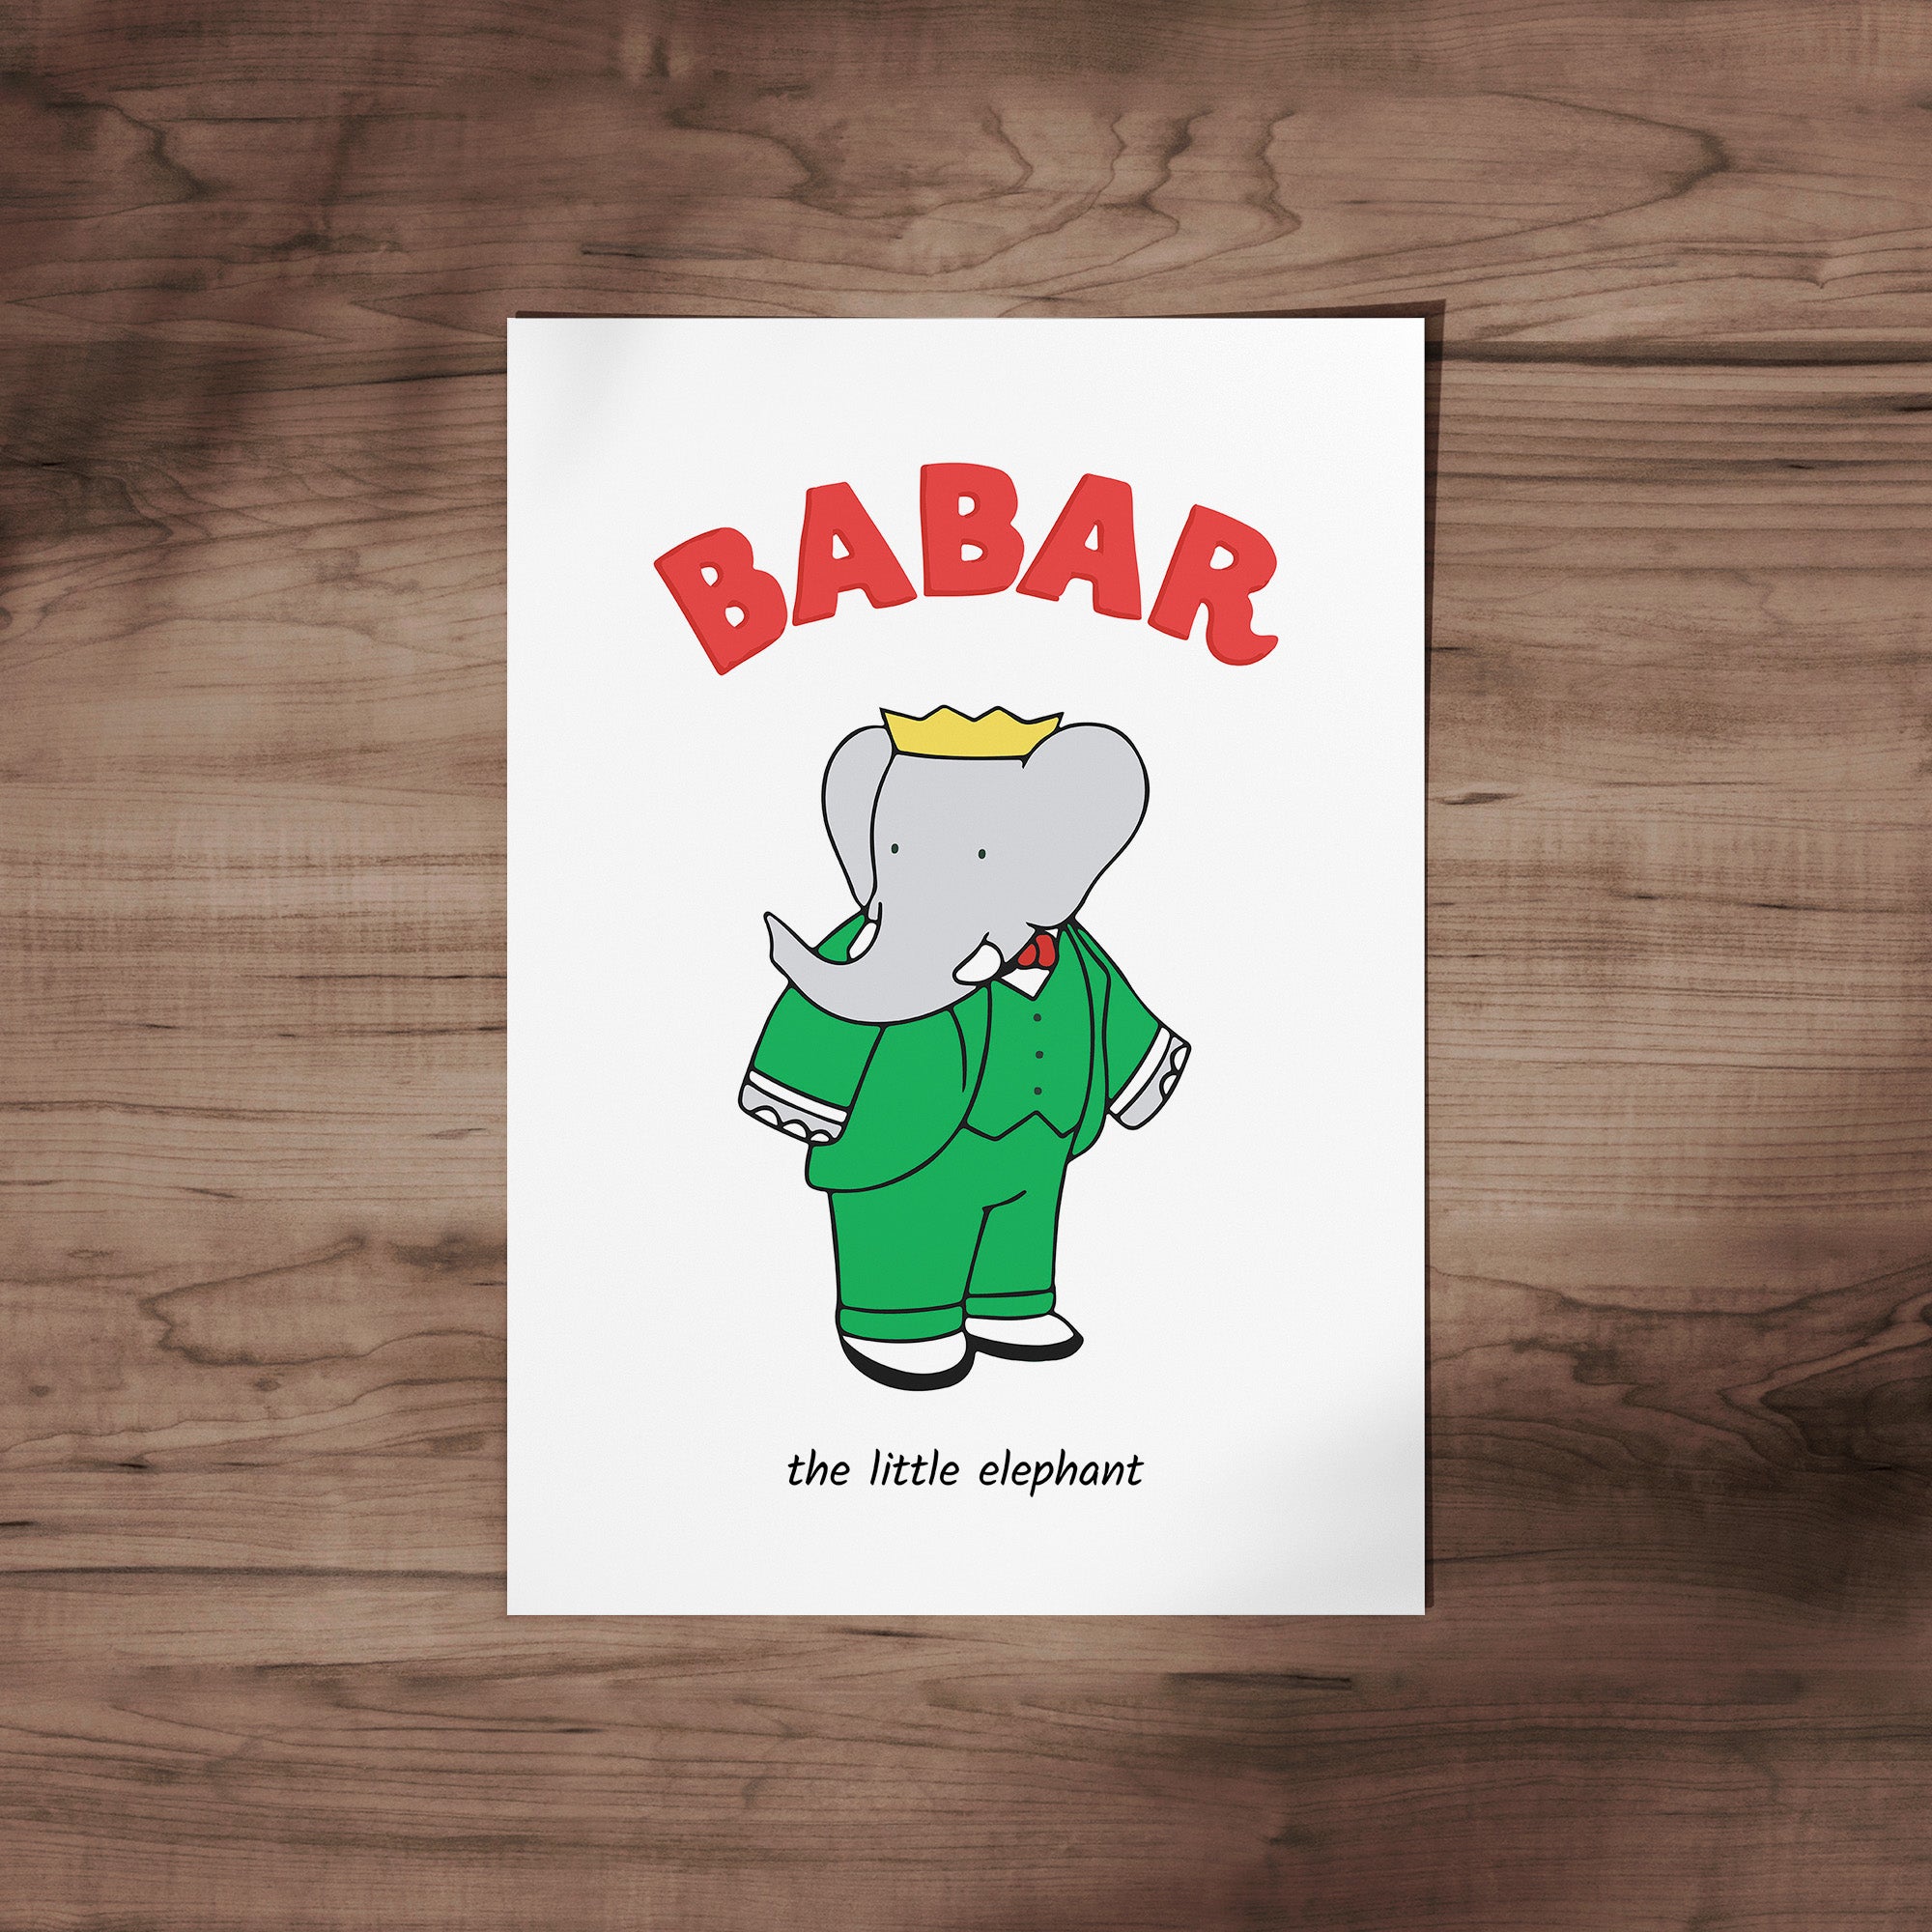 Babar The Little Elephant (White)